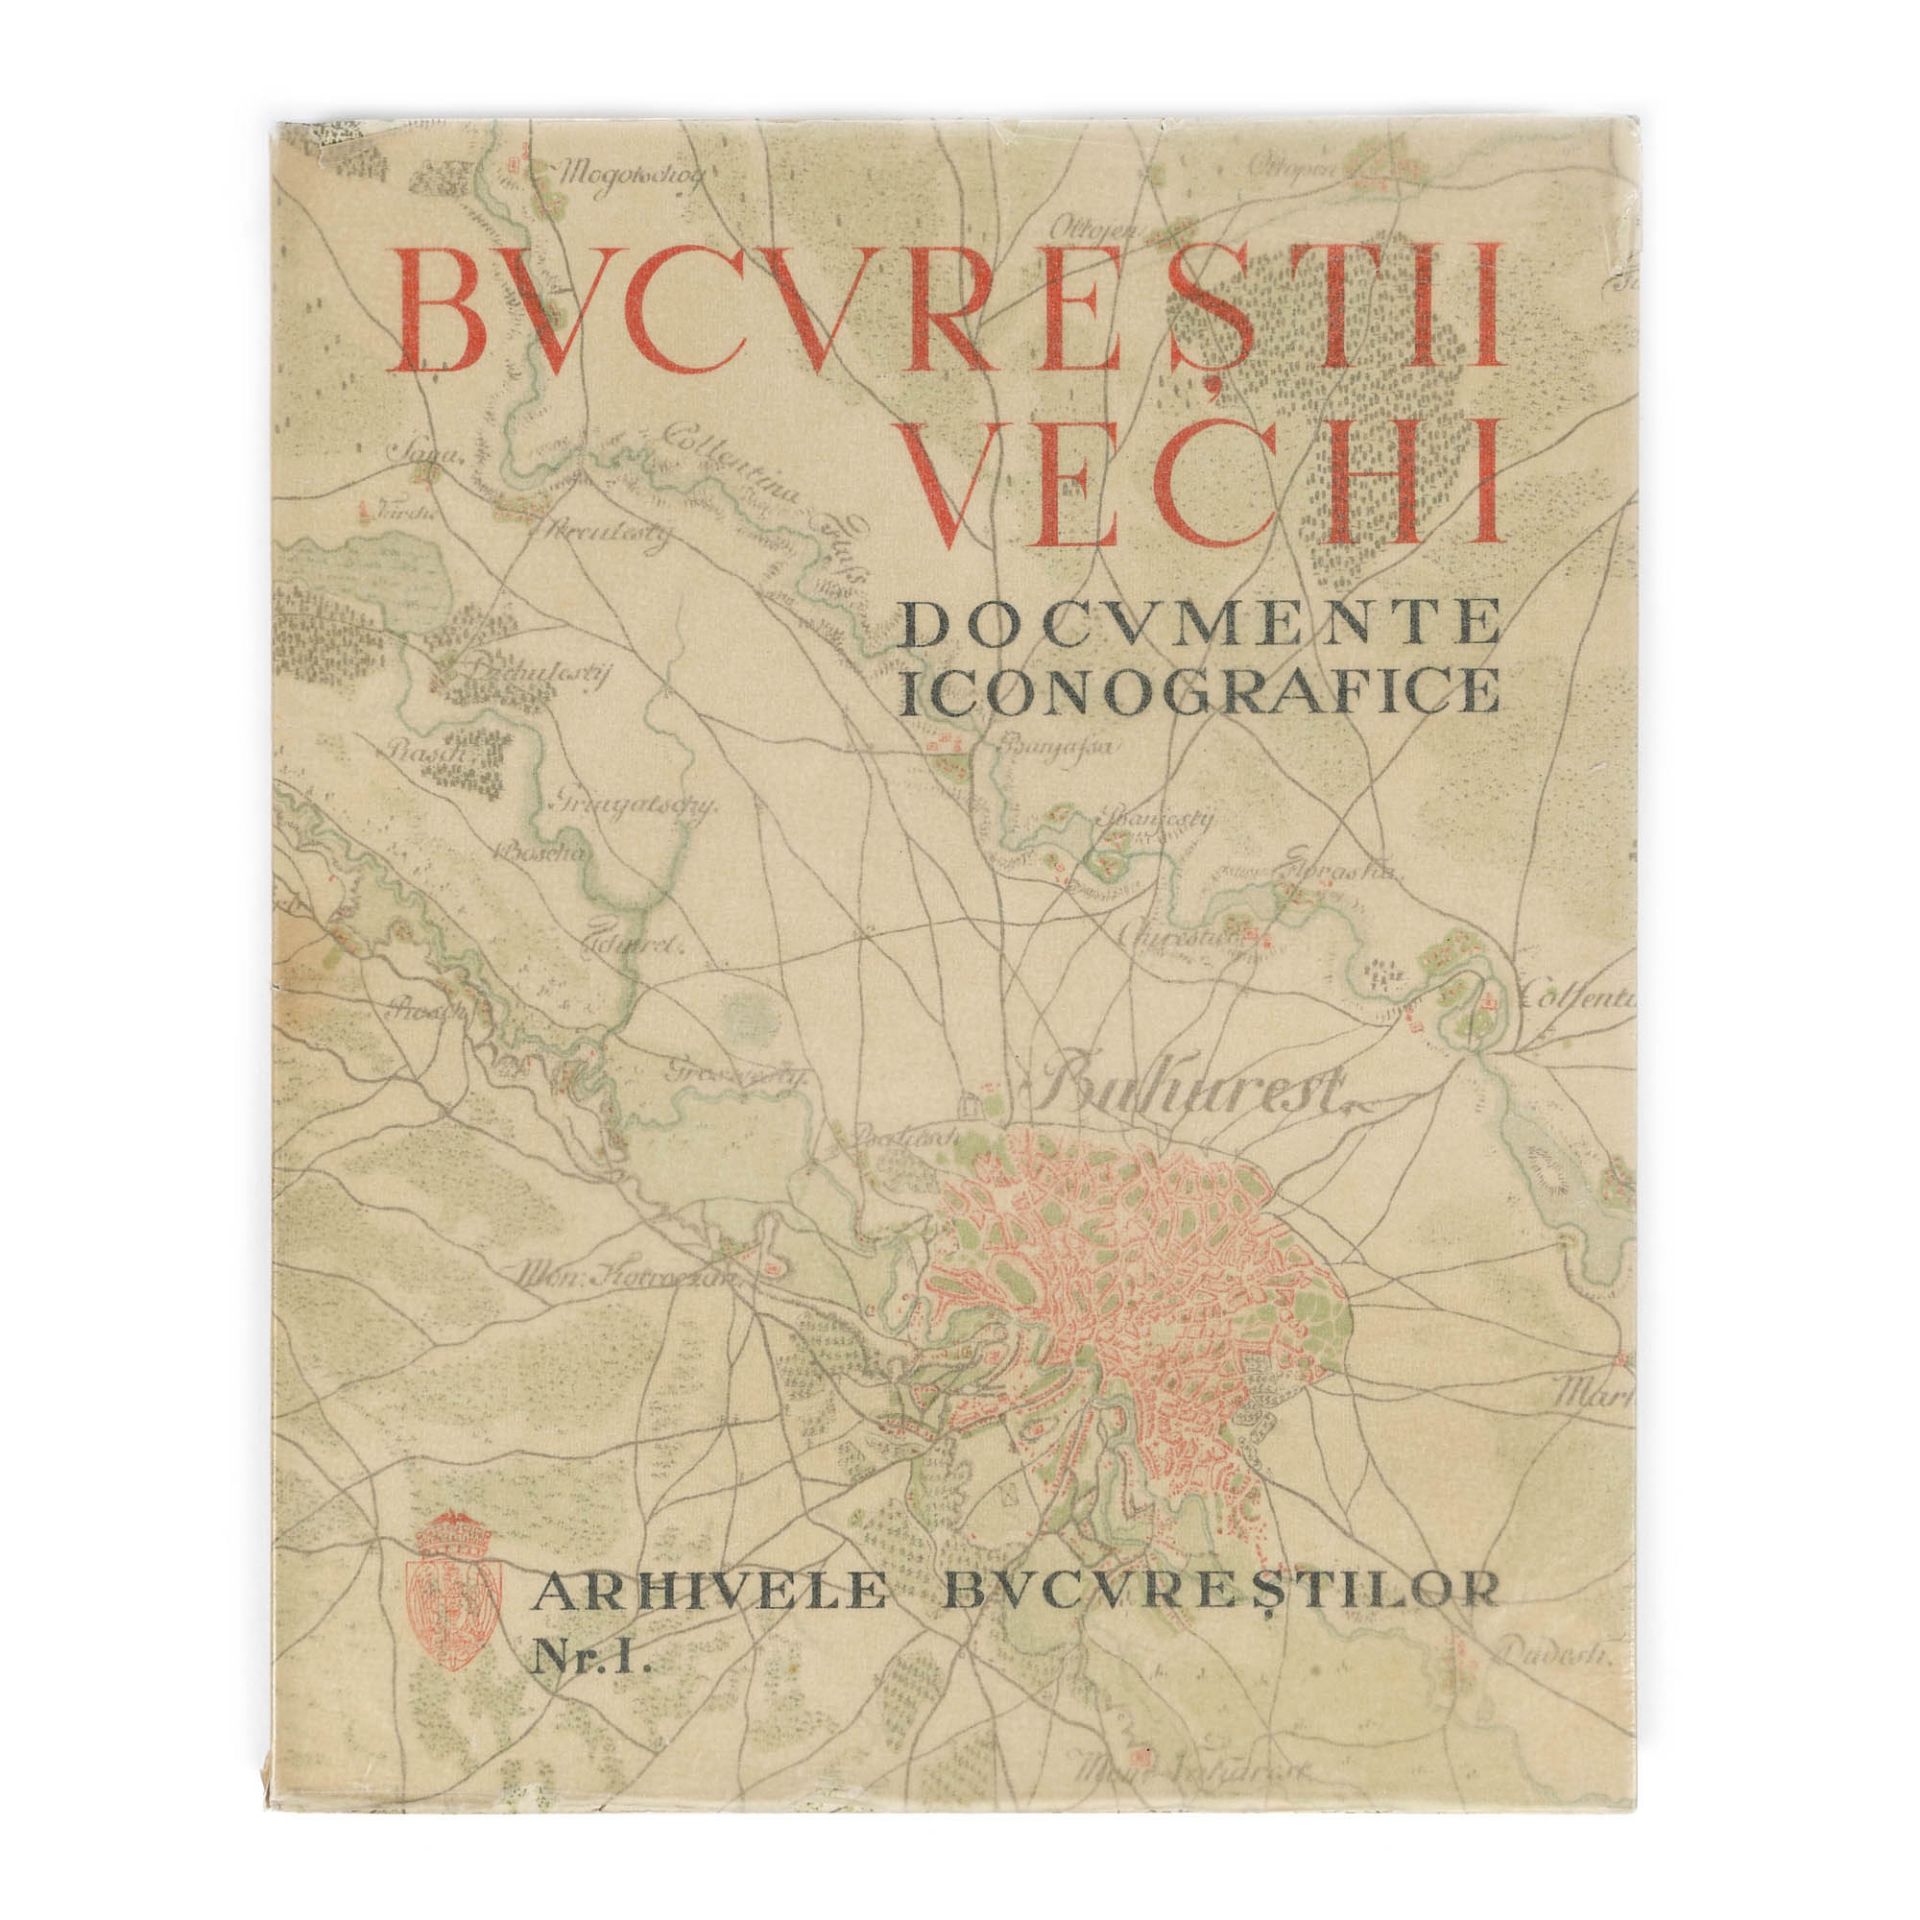 "Bucureștii vechi - documente iconografice" ("Old Bucharest - iconographic documents"), by Adrian C - Image 2 of 9